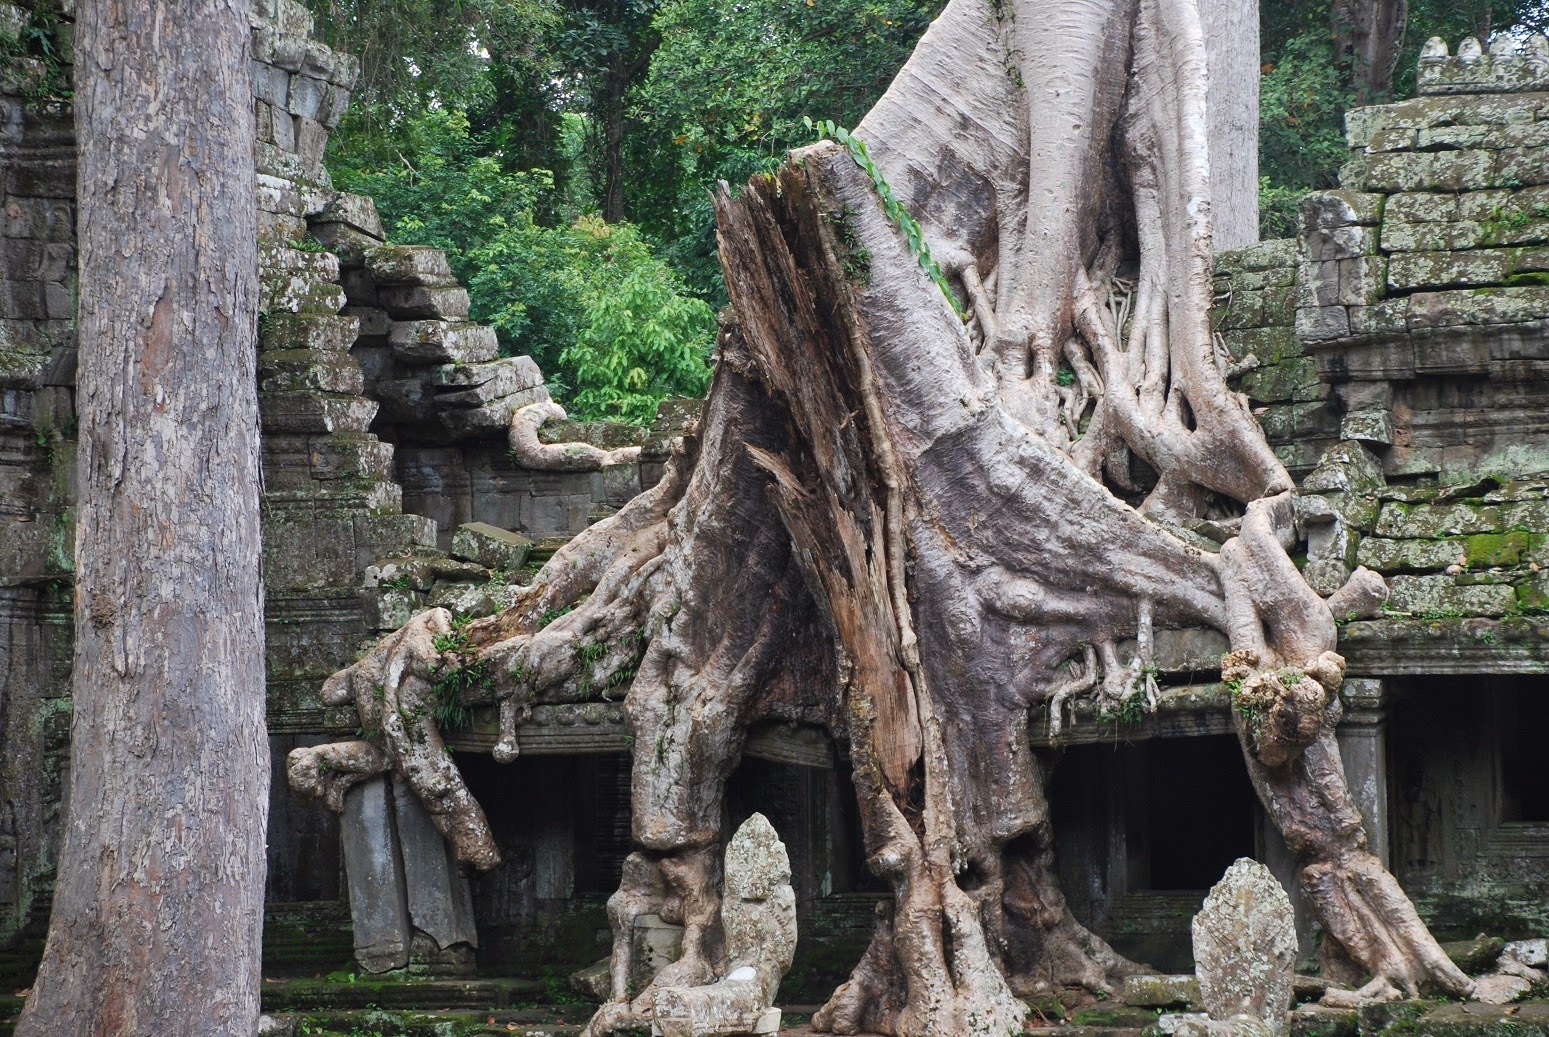 Kambodża - Angkor